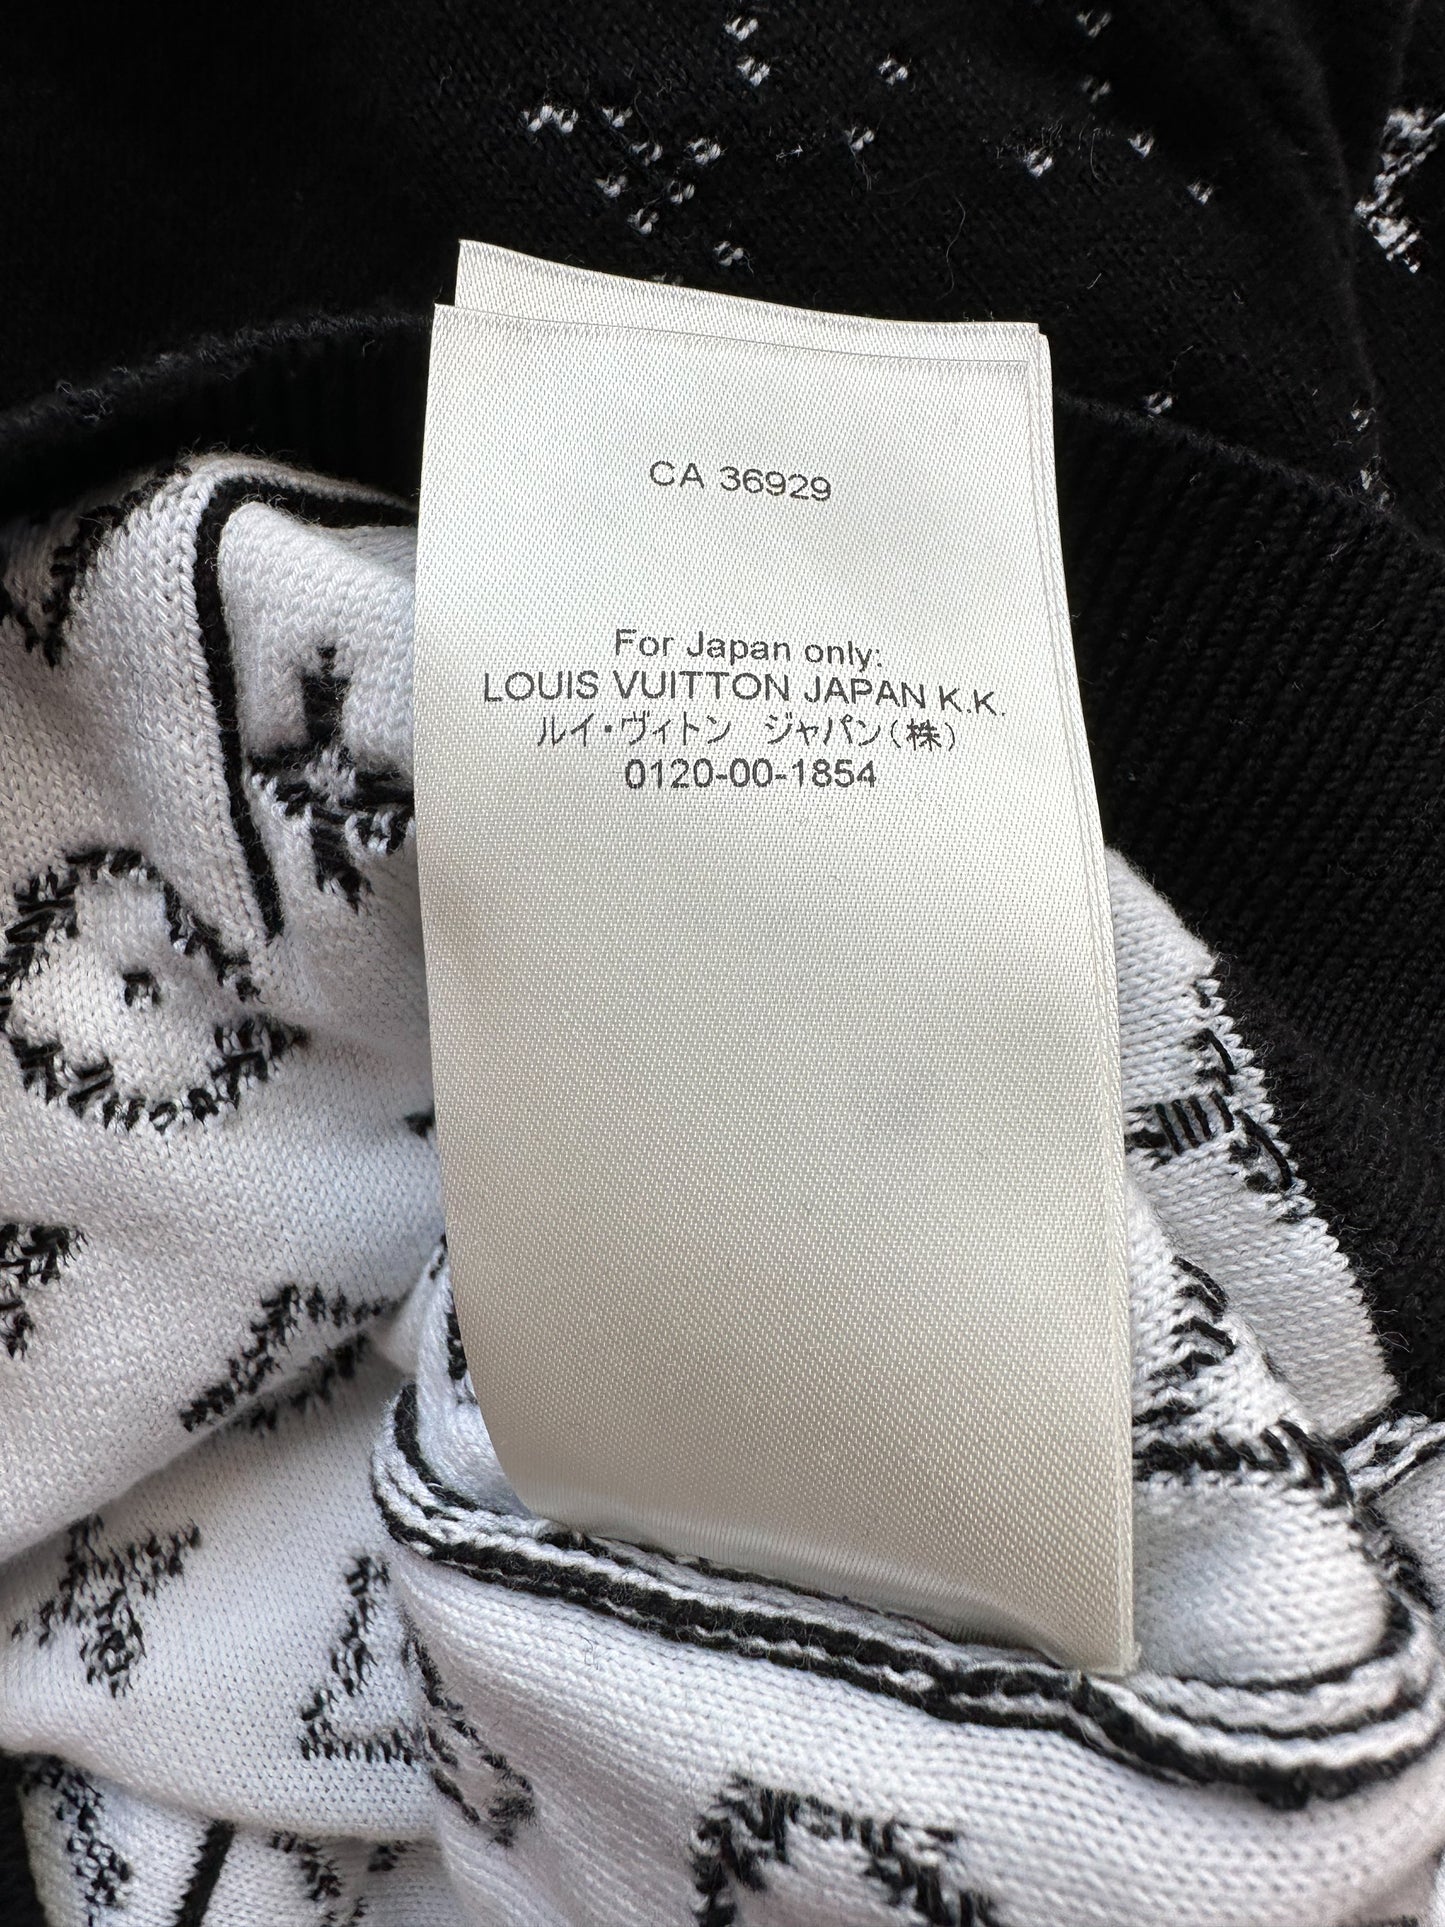 LOUIS VUITTON Monogram gradient hoodie Size XL Black/White 1AA4Y5